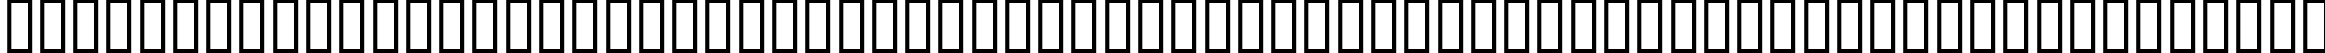 Пример написания шрифтом EuroRoman Oblique текста на украинском